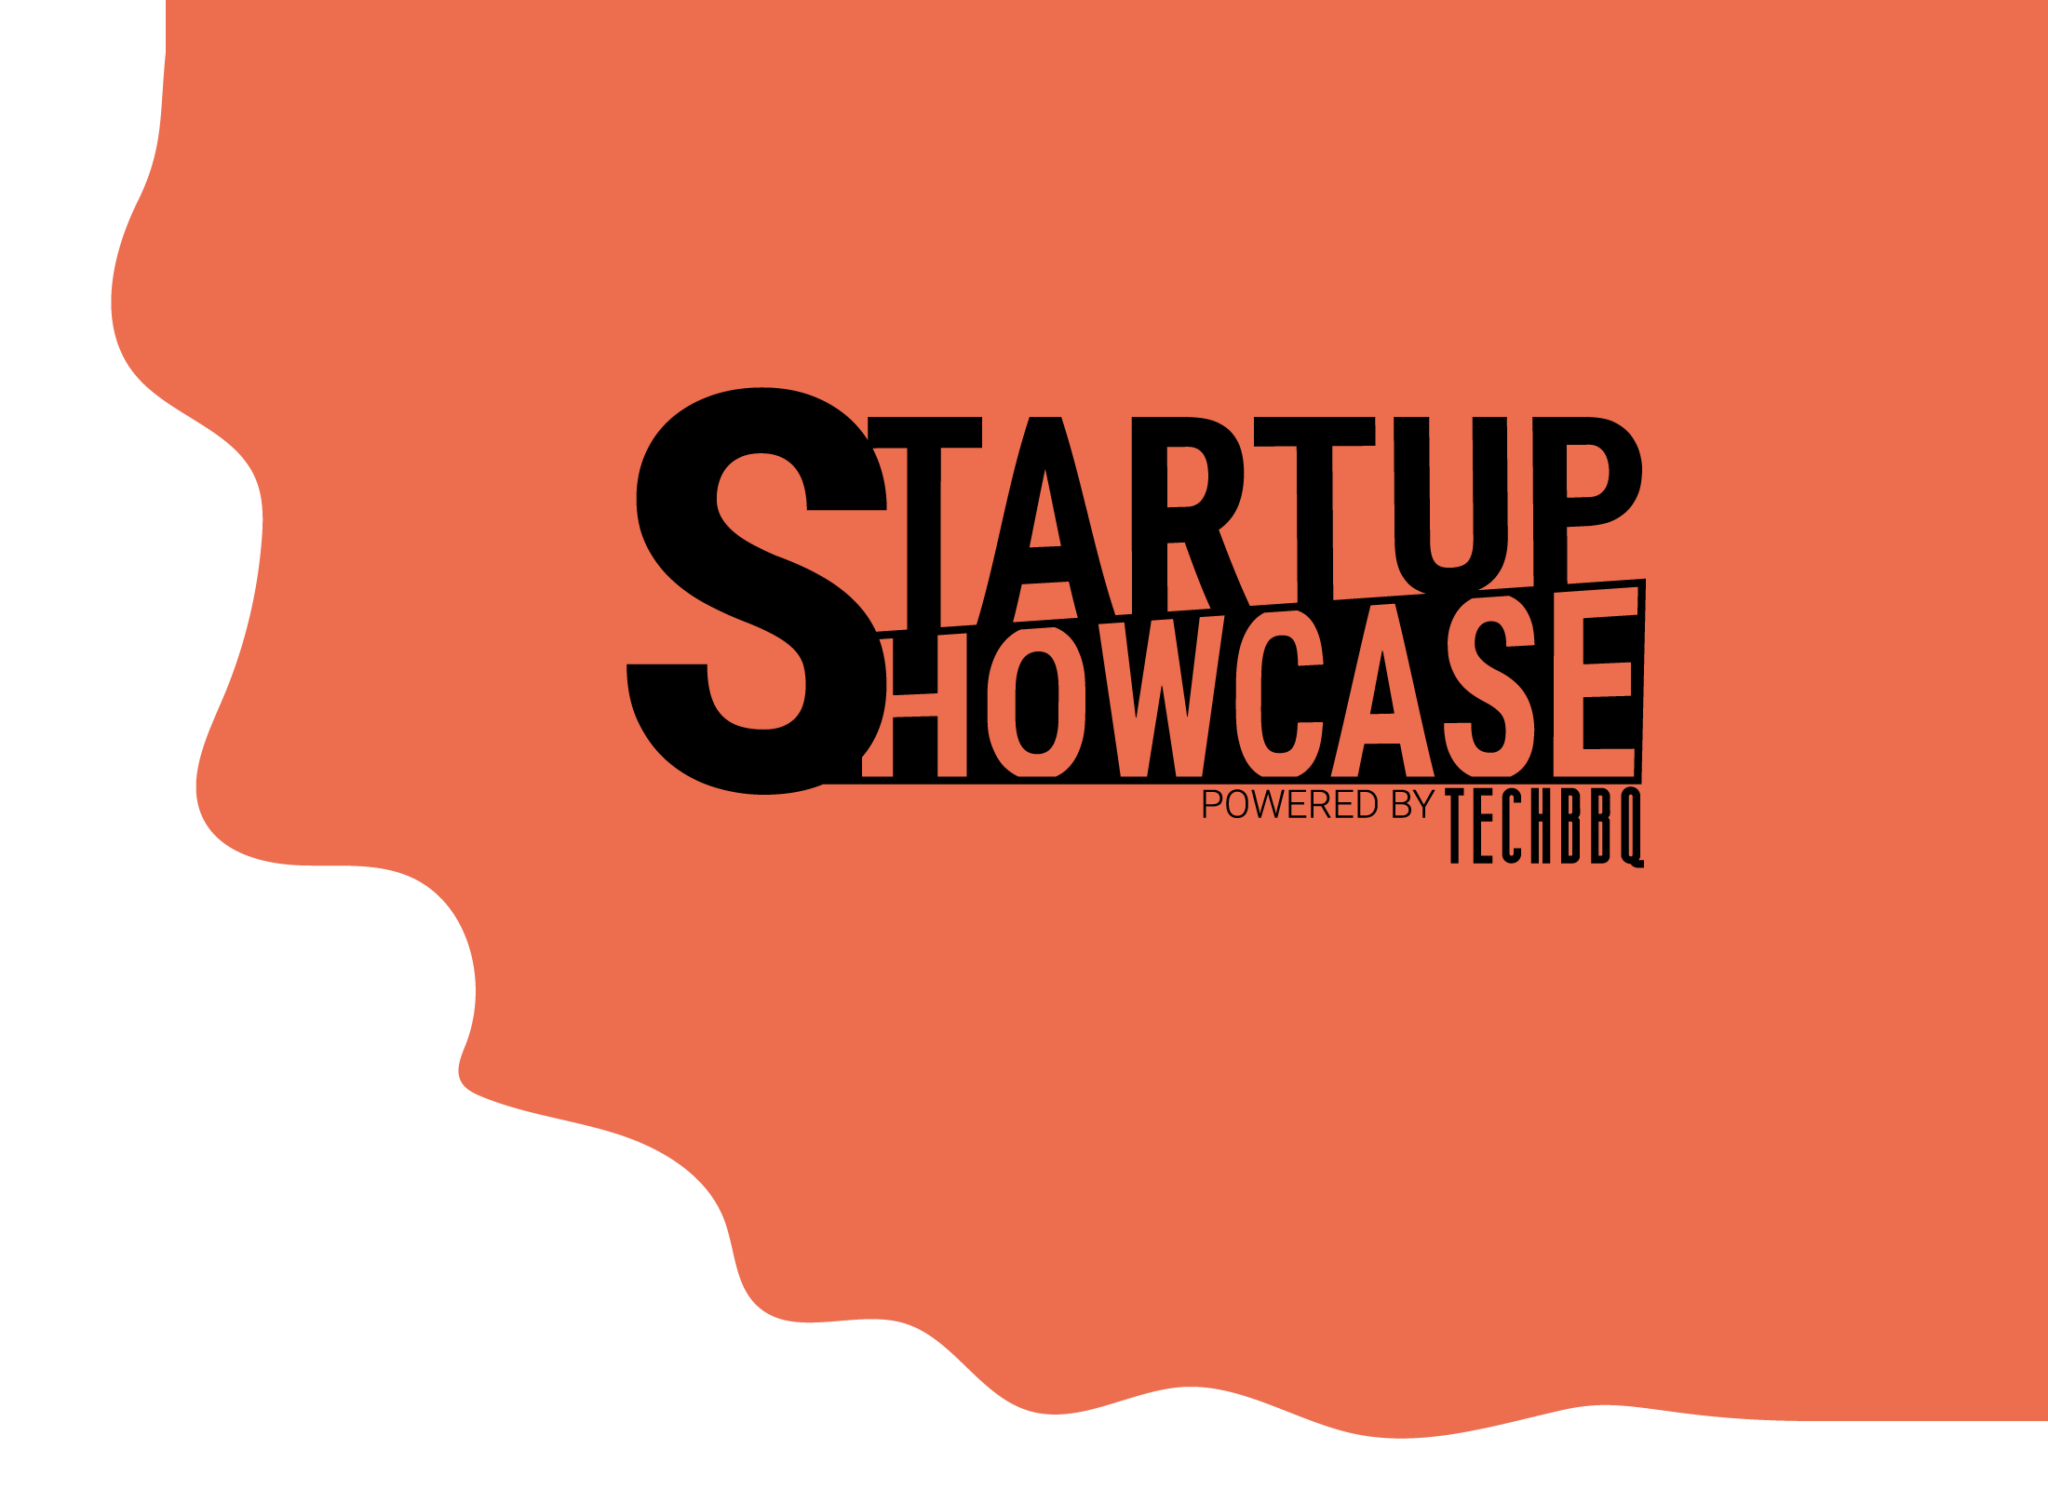 Startup Showcase TechBBQ